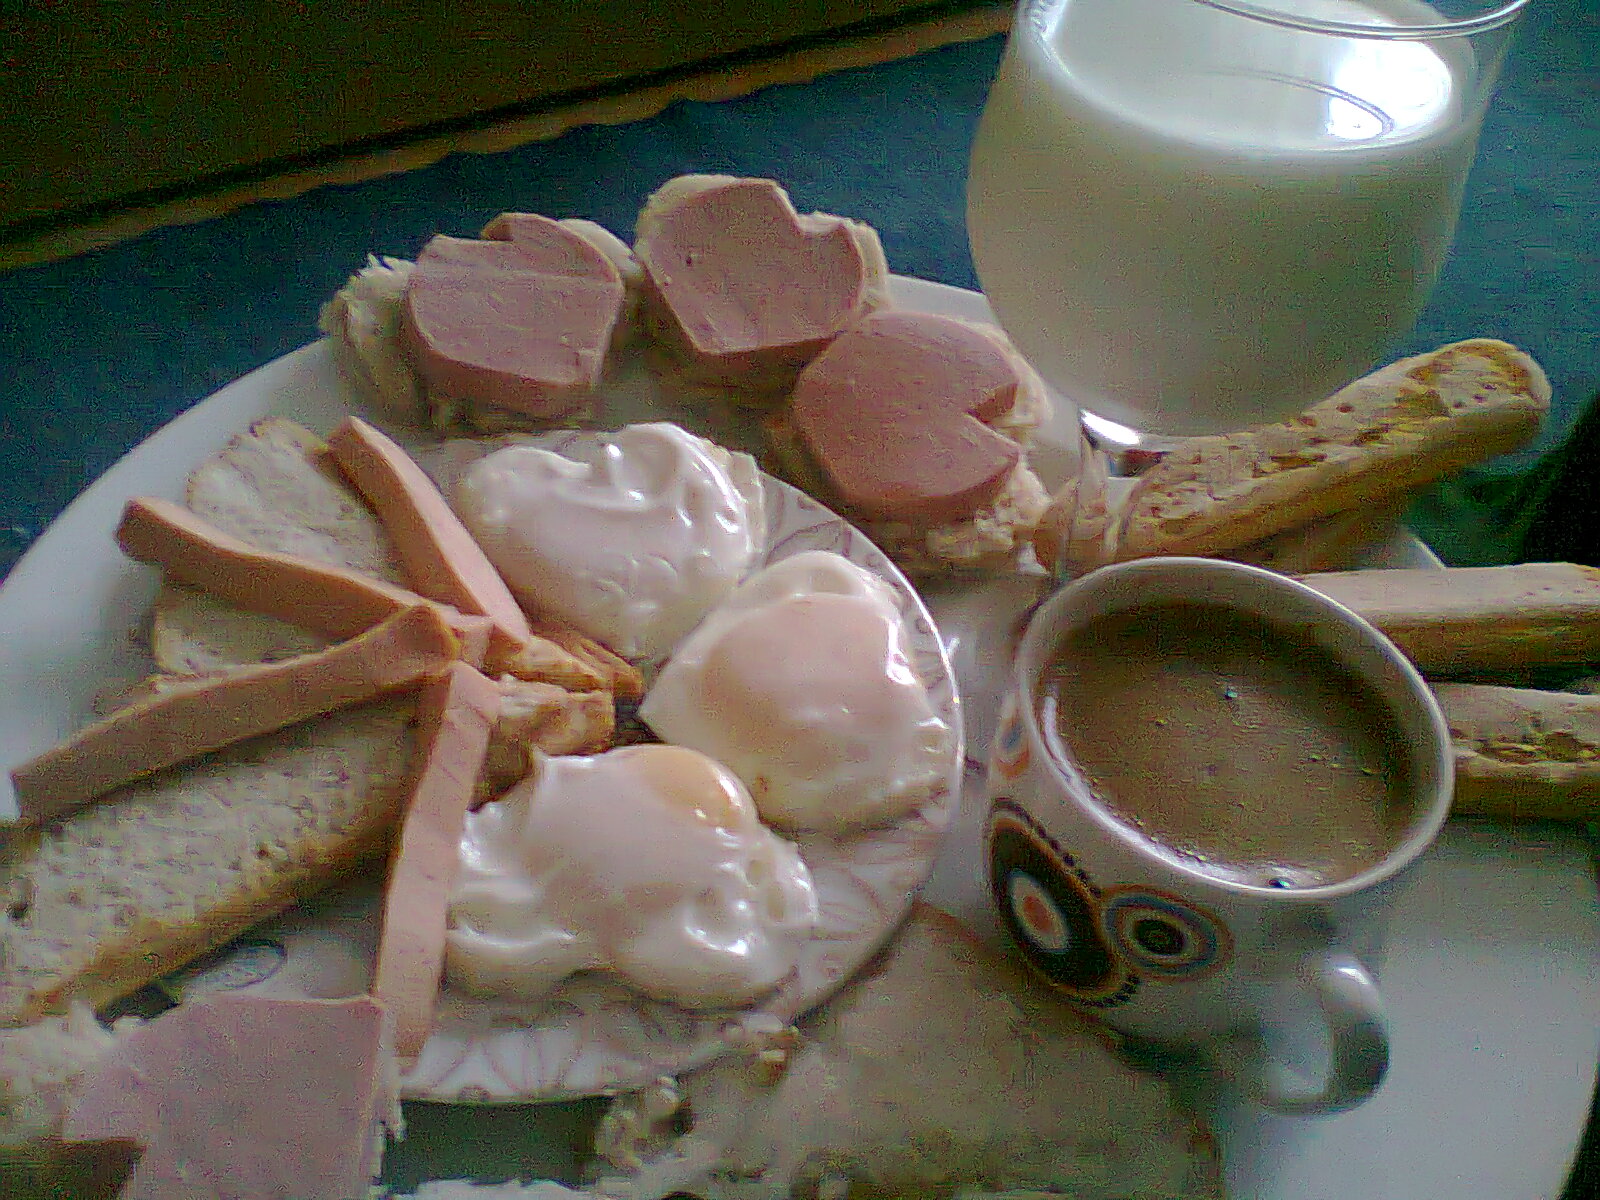 Mic dejun de Sf. Valentin